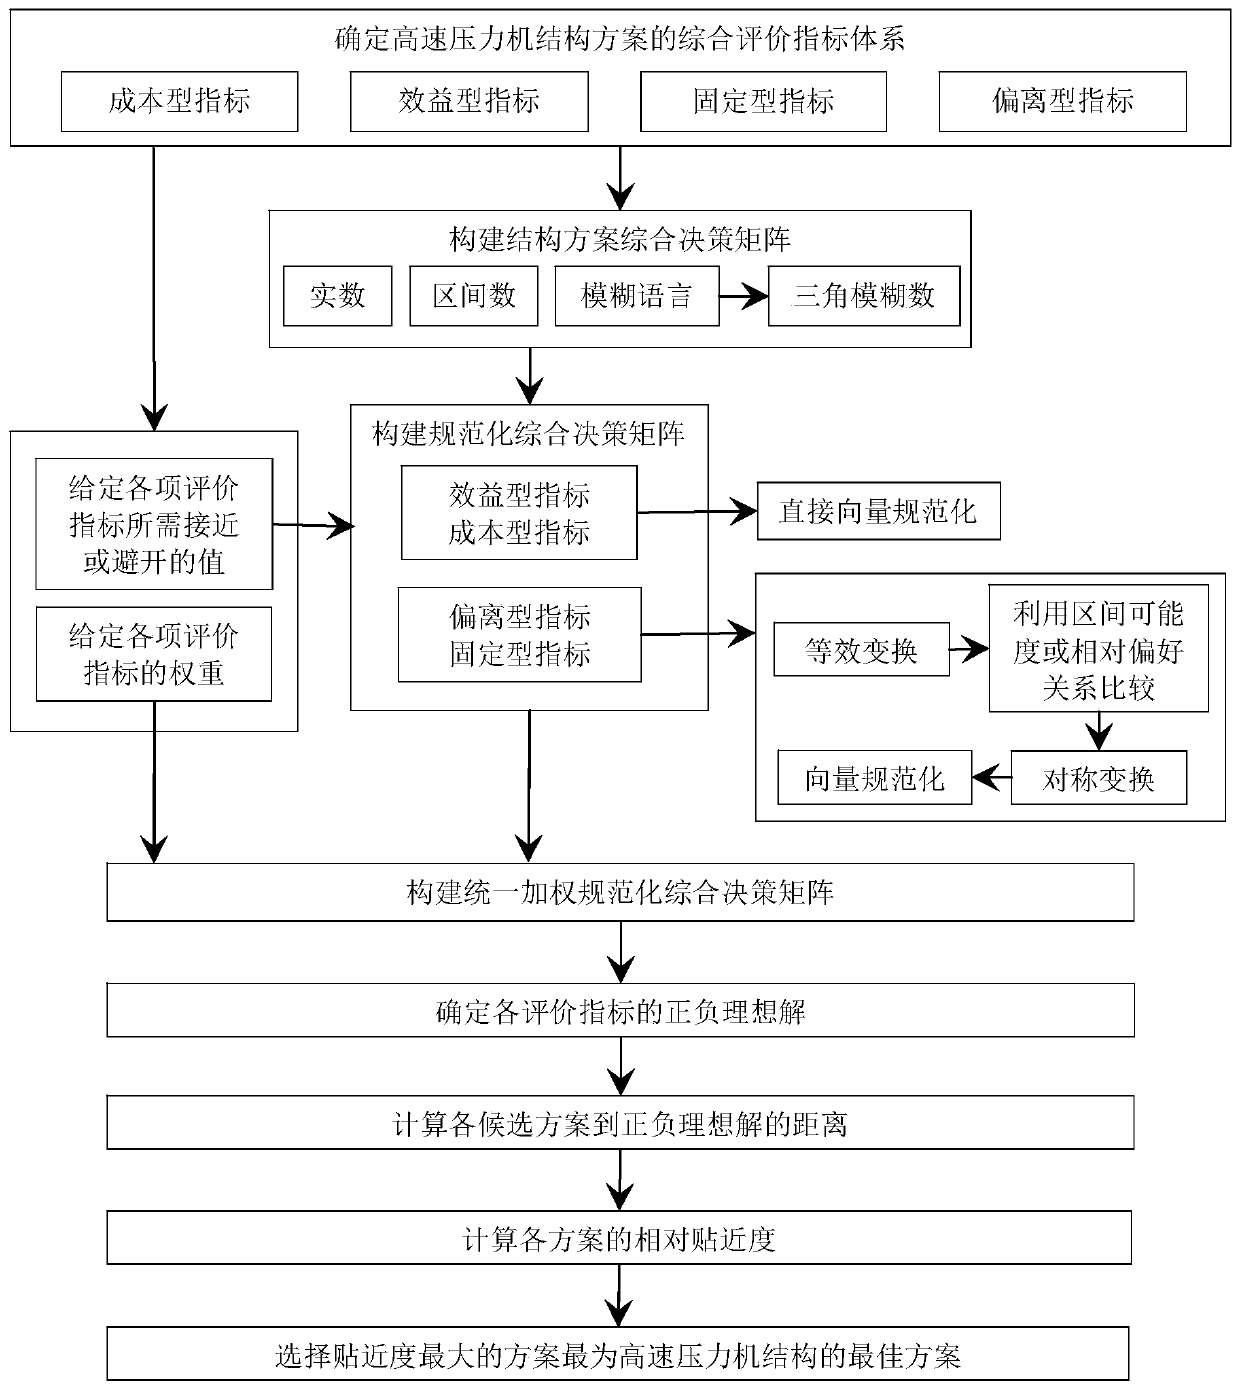 A comprehensive evaluation method of high-speed press structure scheme